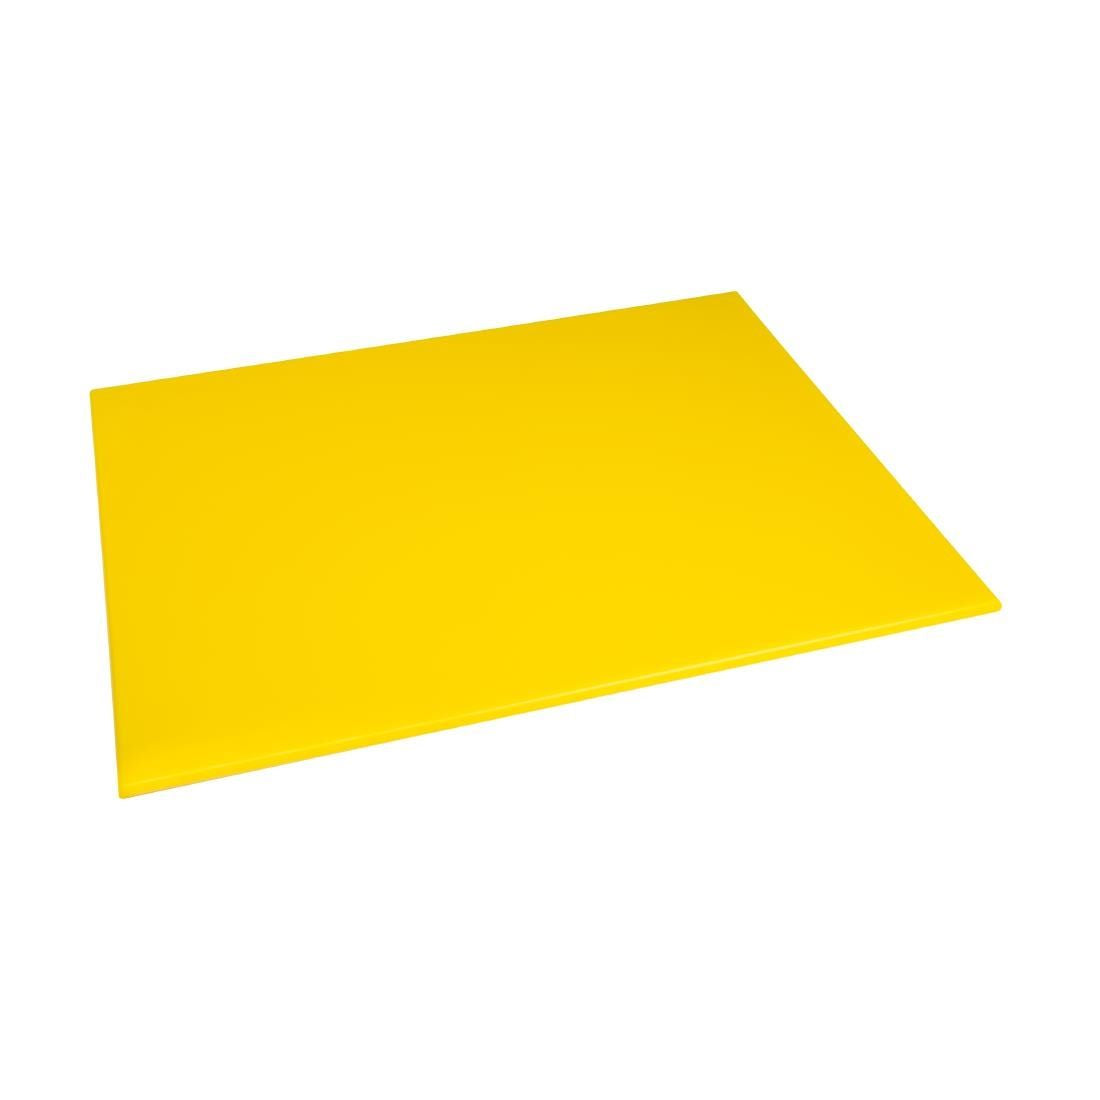 Hygiplas High Density Yellow Chopping Board Large JD Catering Equipment Solutions Ltd